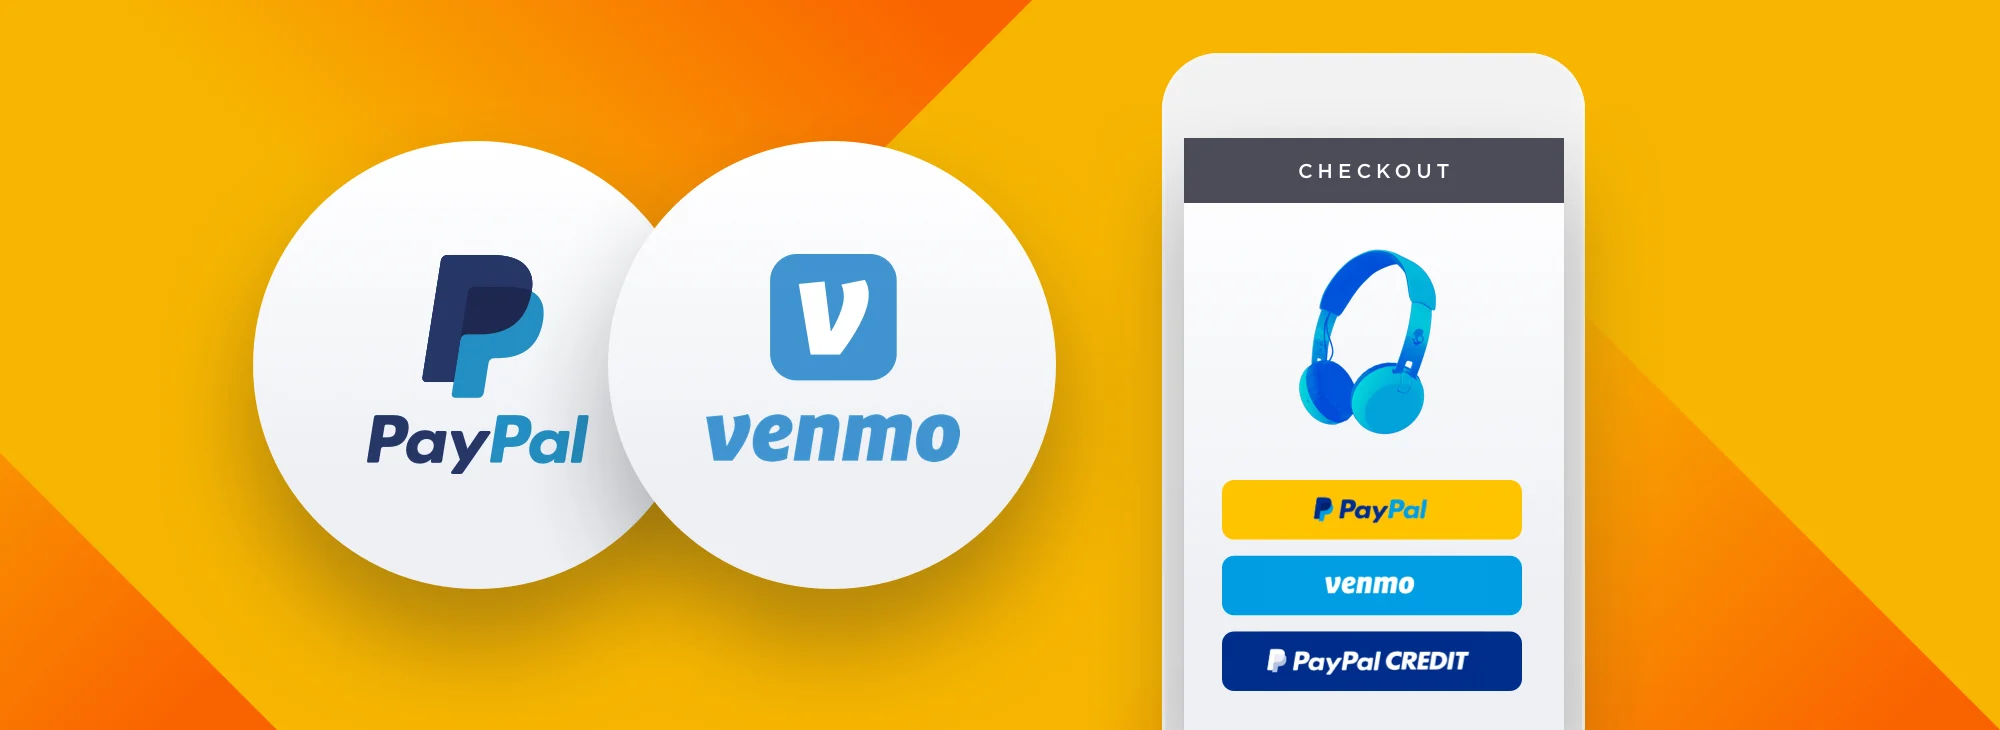 https://cms-wp.bigcommerce.com/wp-content/uploads/2019/10/4746-Blog-June-PayPal-Smart-Buttons-Venmo-1.jpg